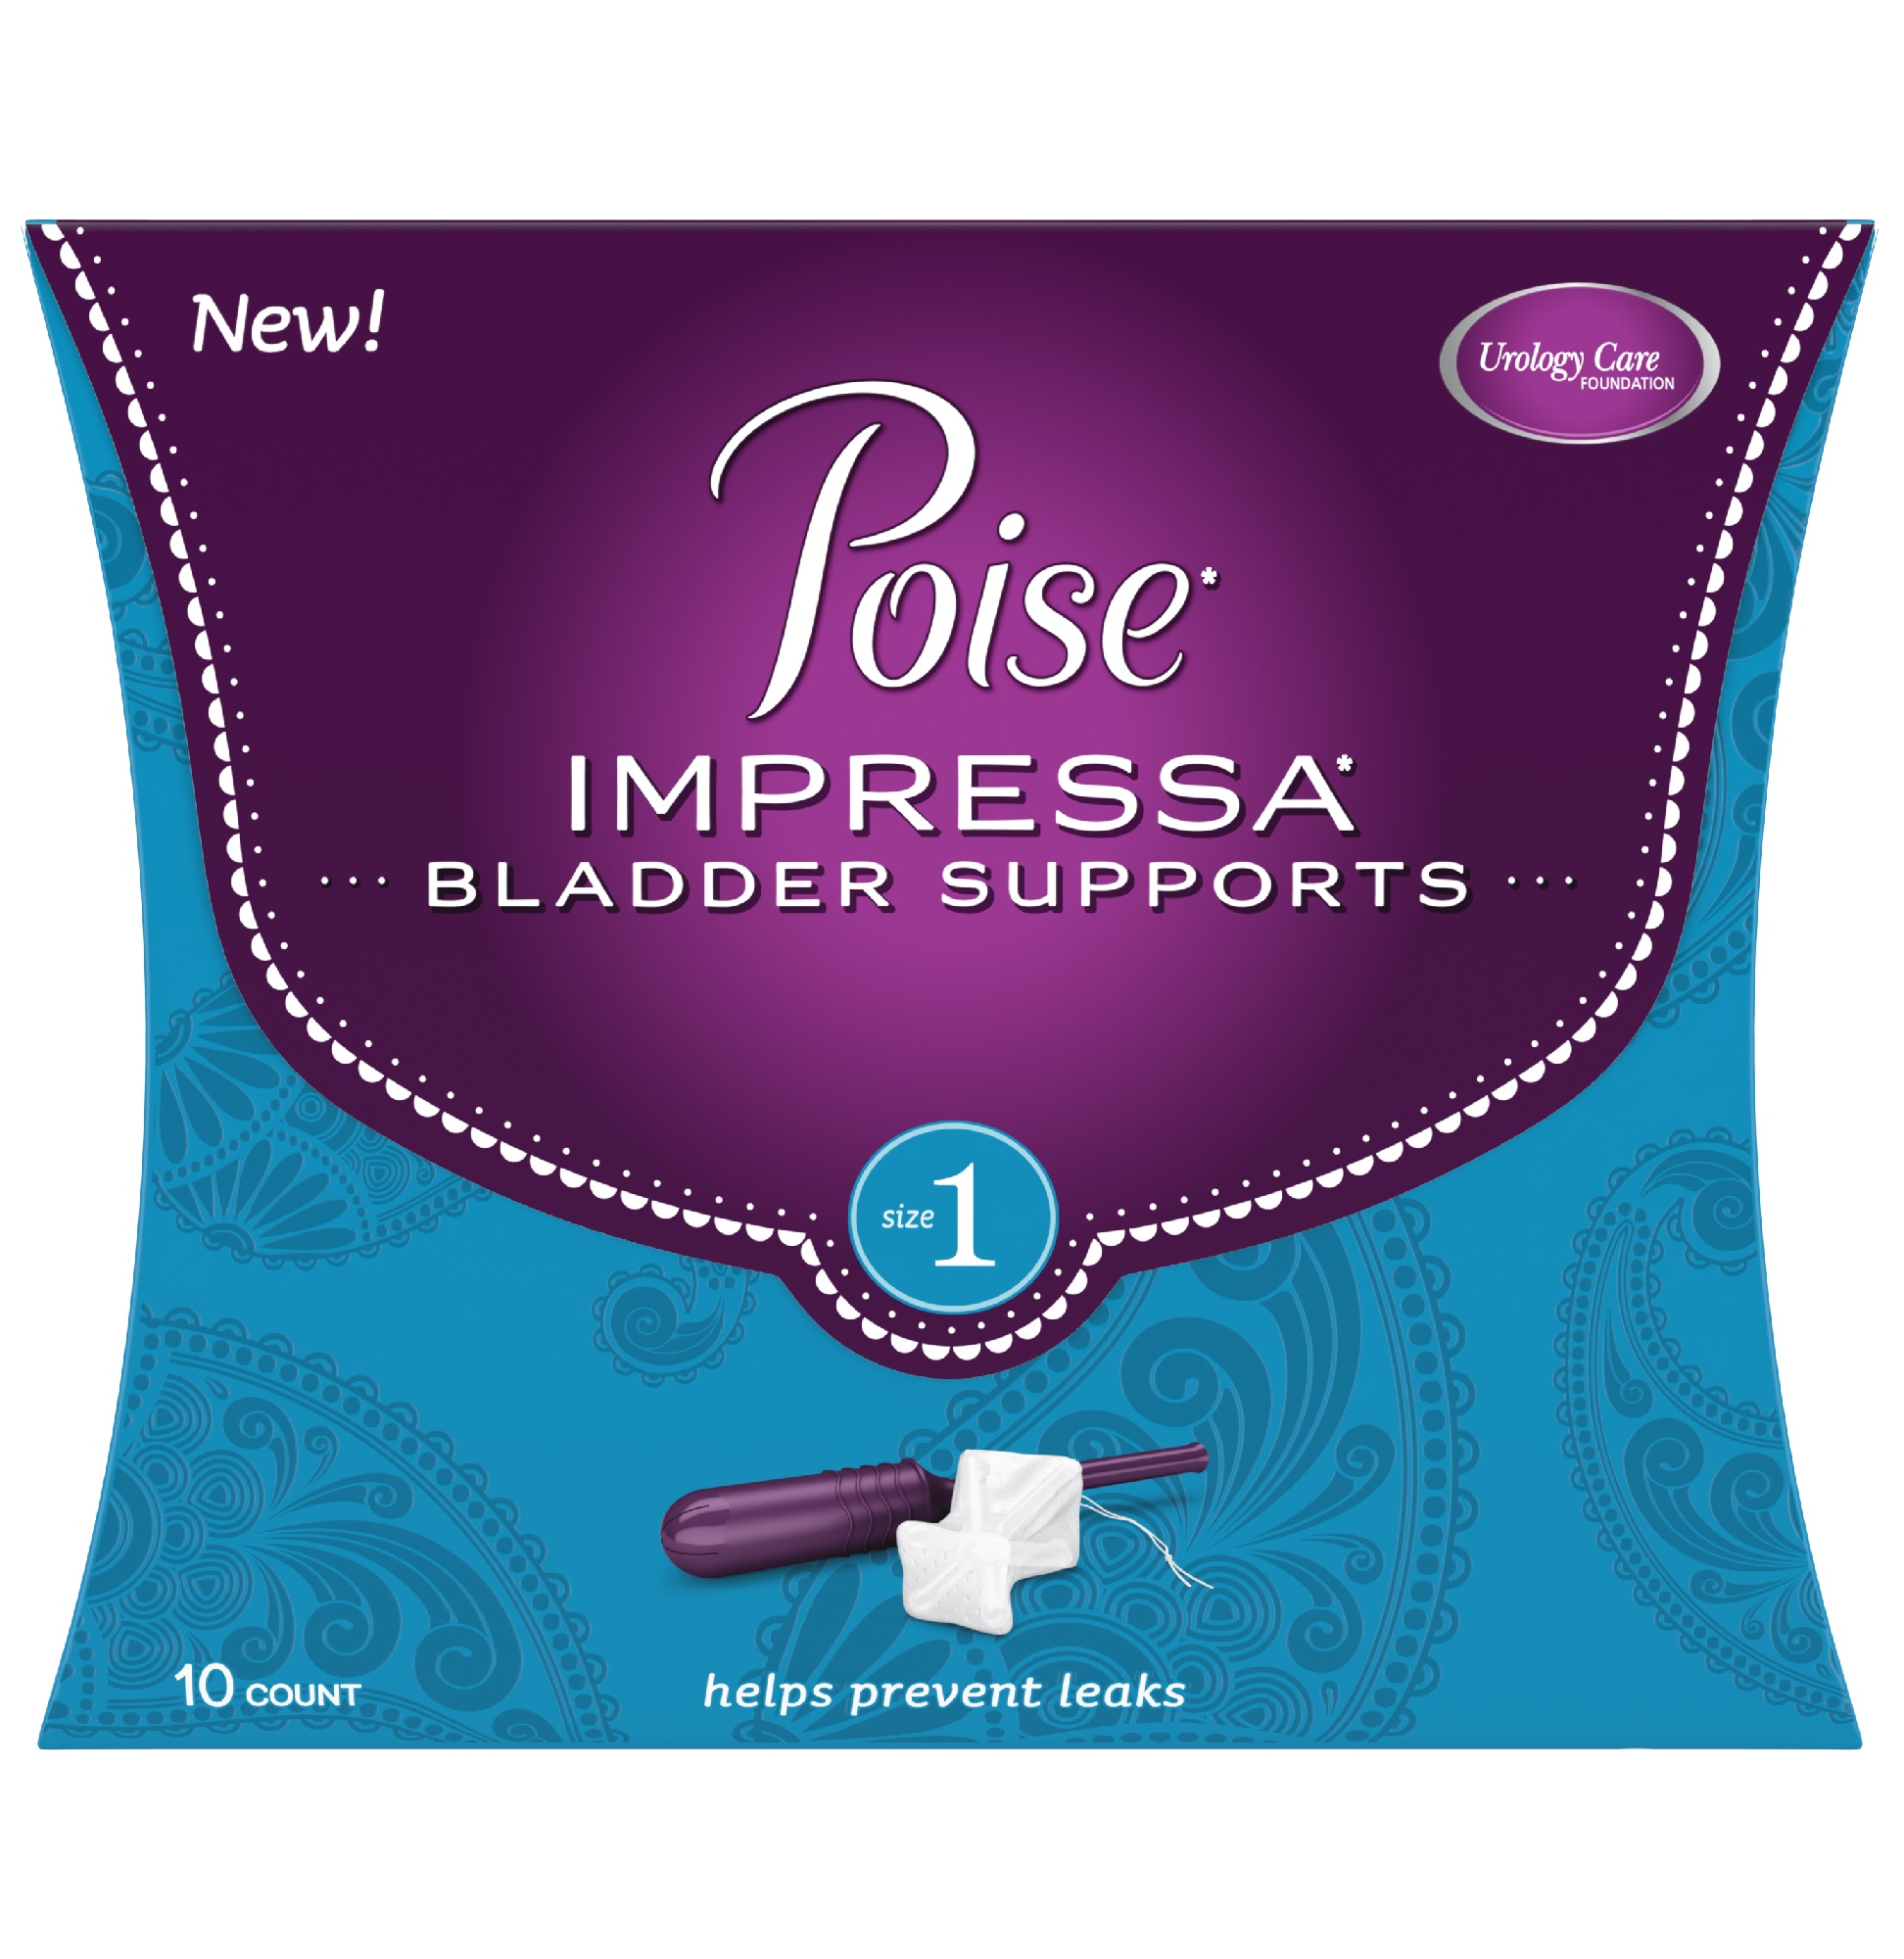 PoiseImpressa I introduce you to Poise Impressa Bladder Support, the  revolutionary new productbdesigned to h…